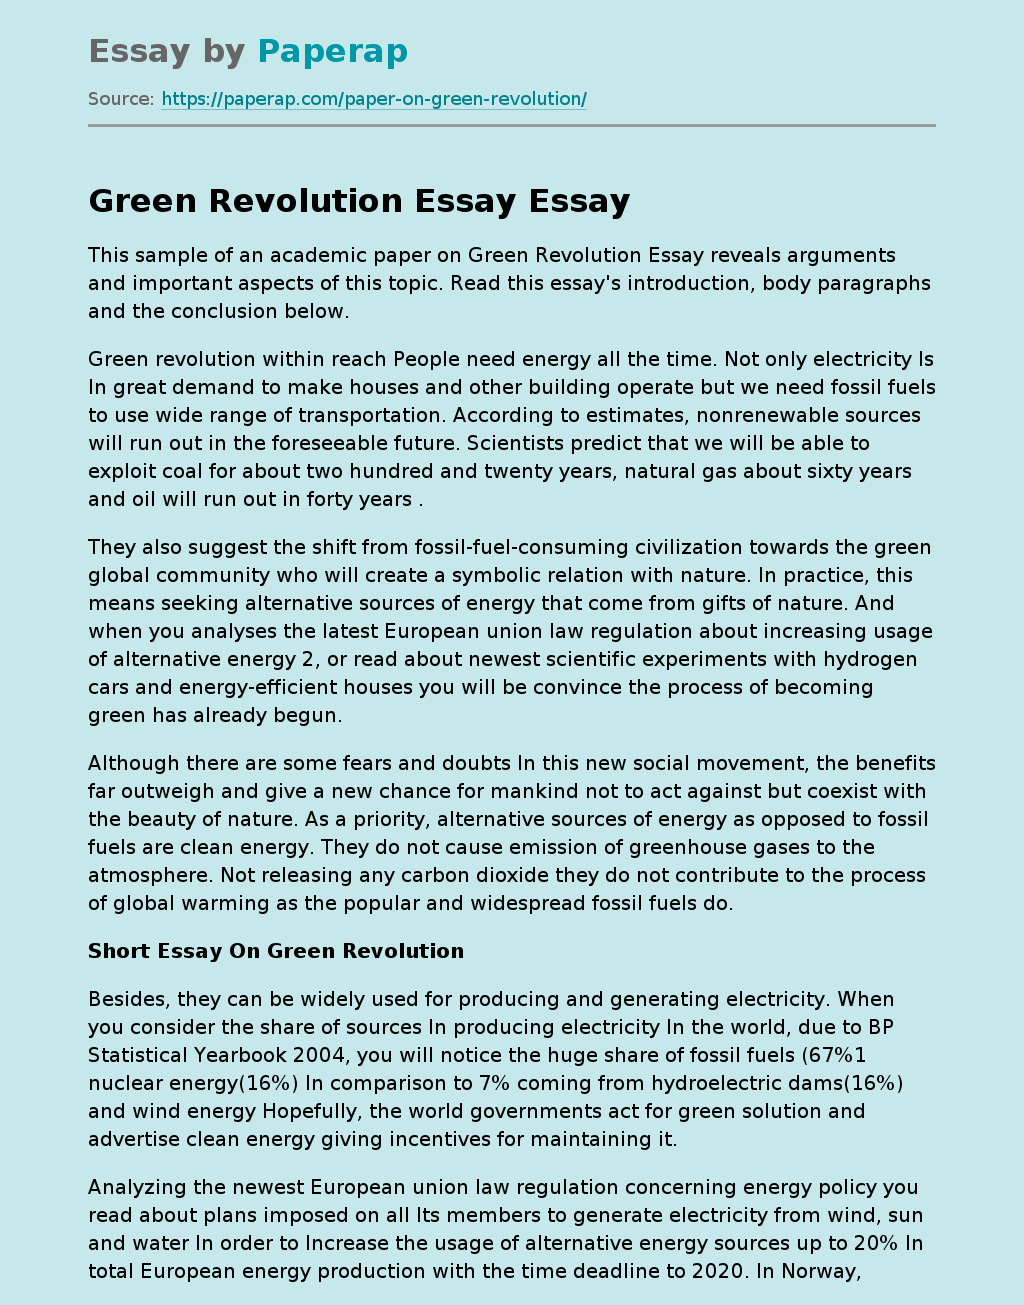 Green Revolution Within Reach